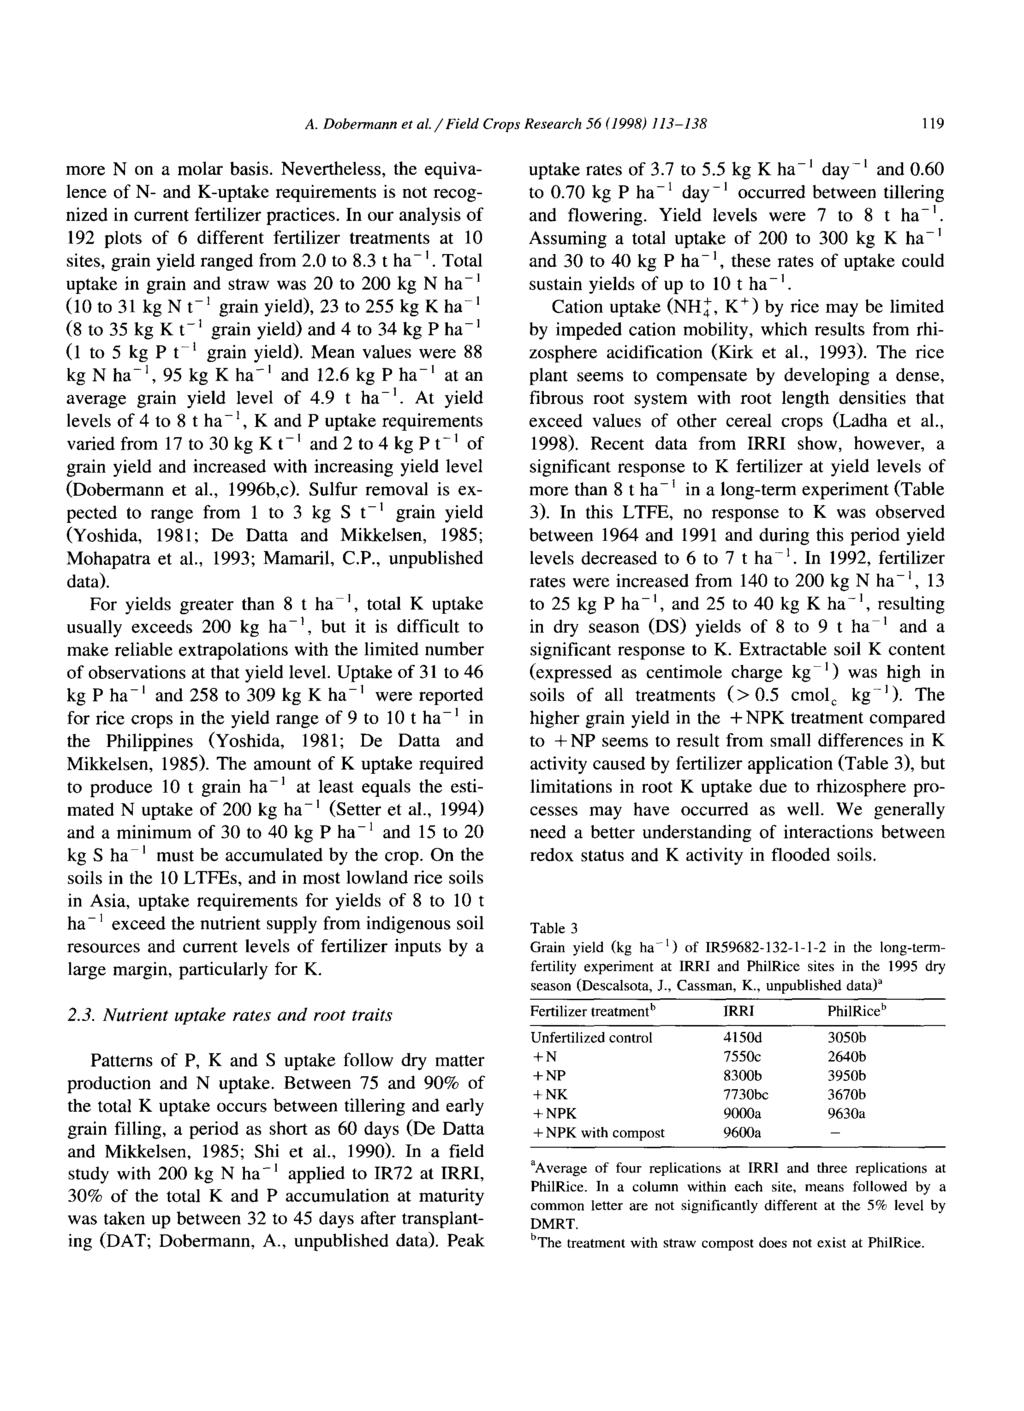 A. Dobermann et al. / Field Crops Research 56 (1998) 113-138 119 more N on a molar basis.